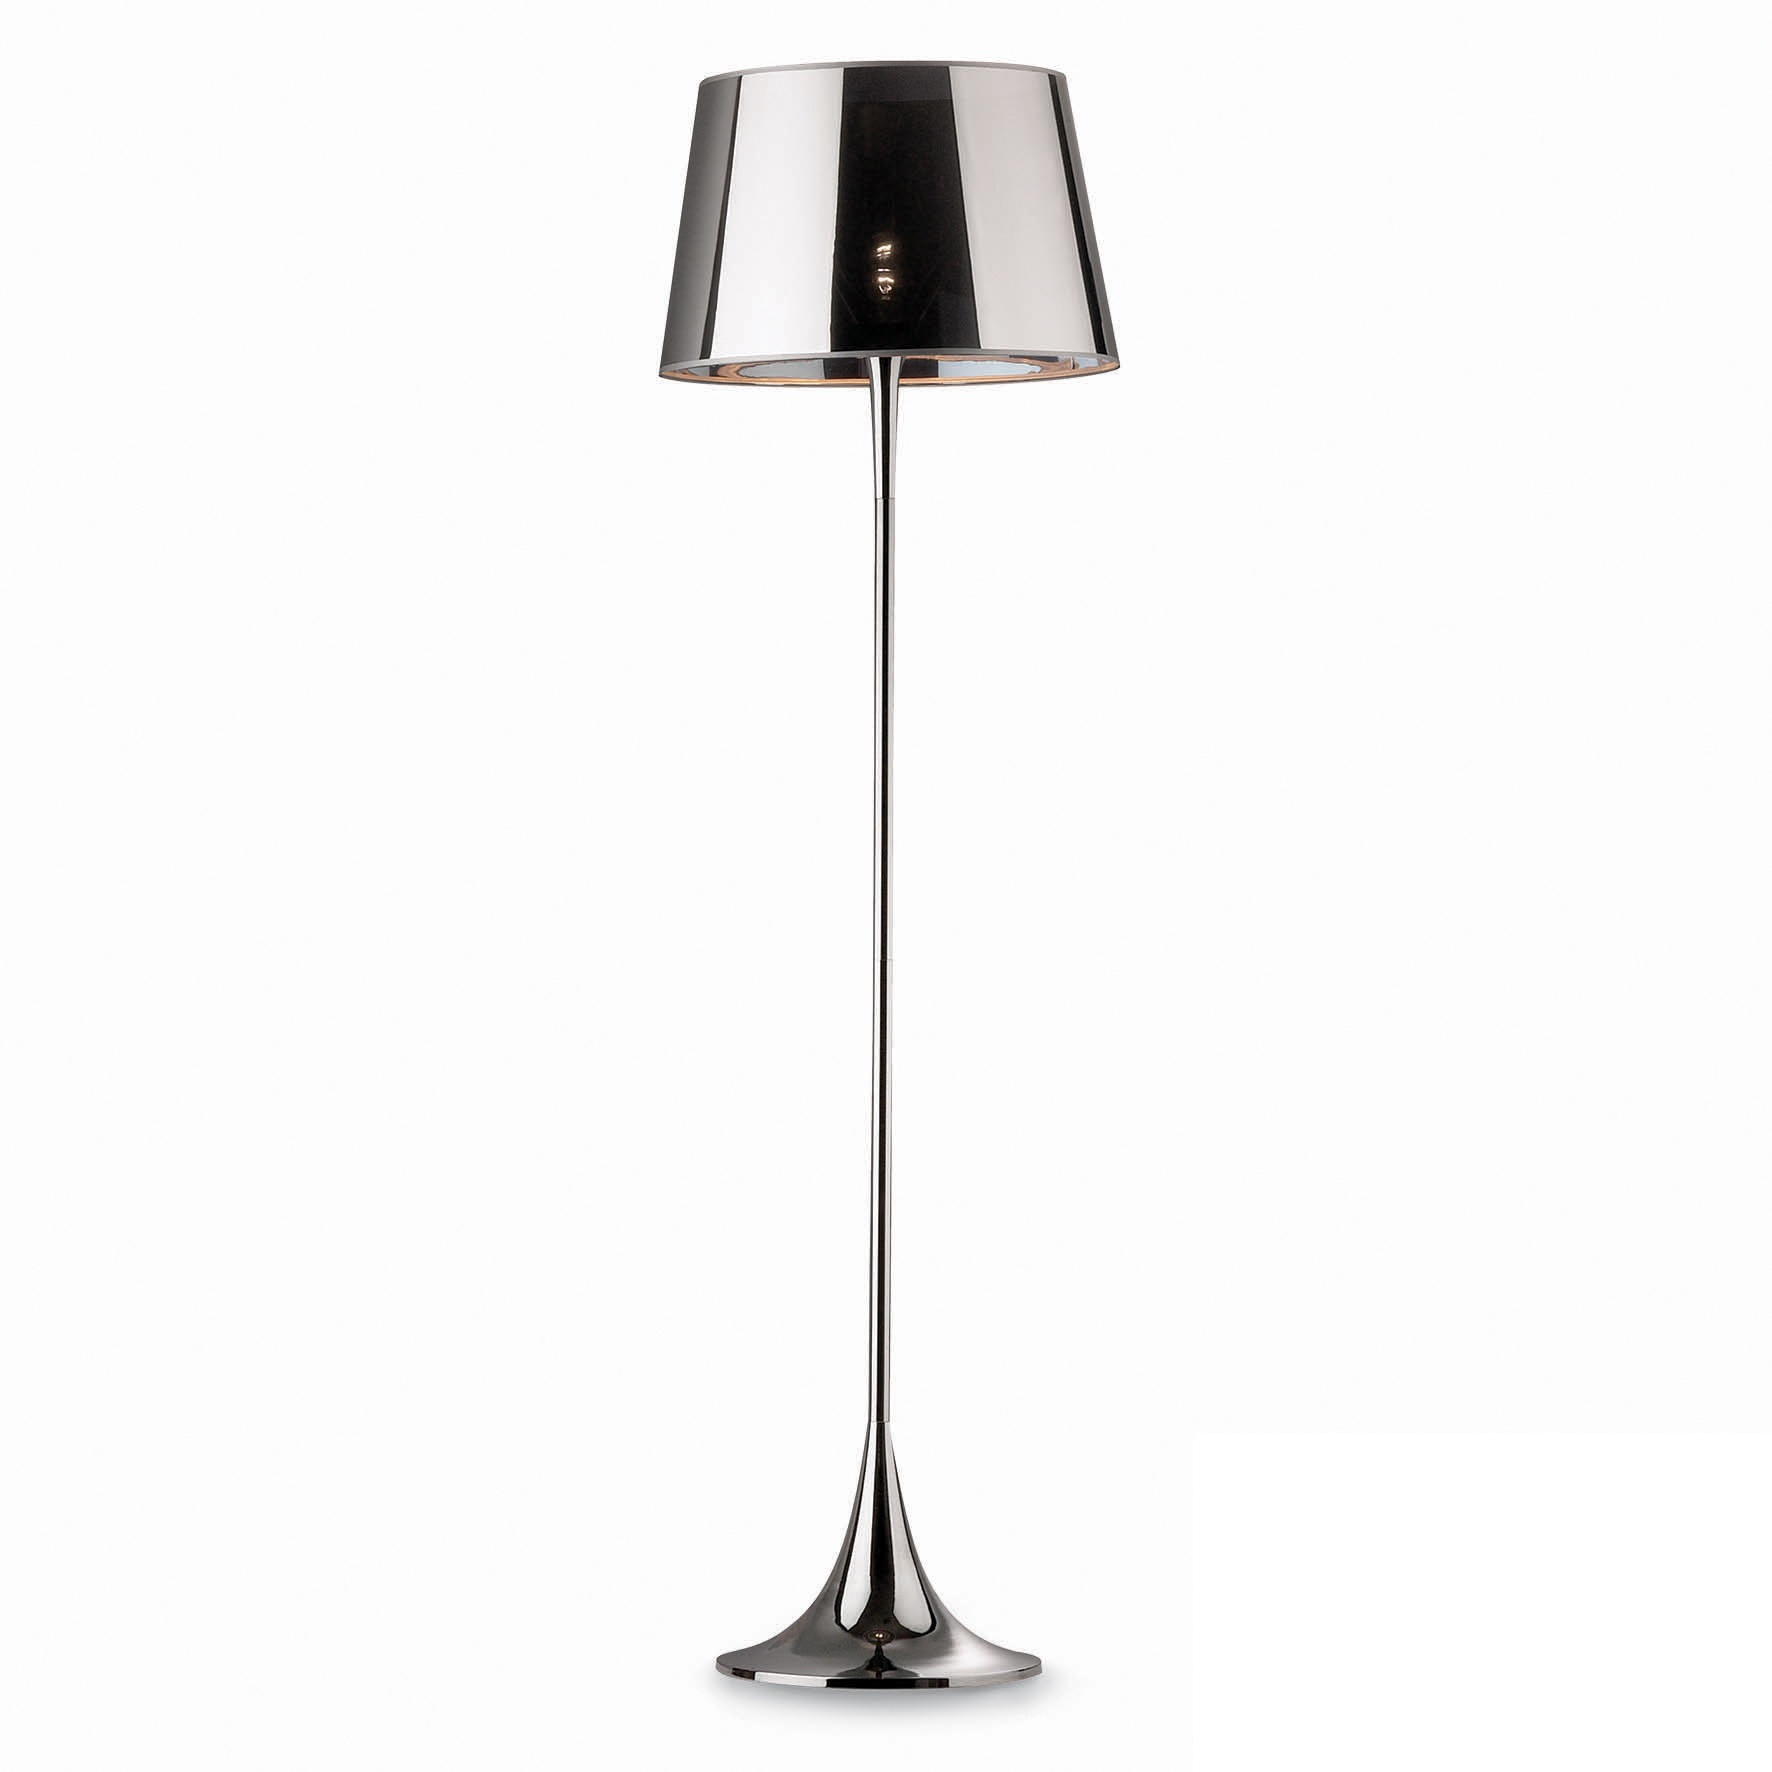 Ideallux London Pt1 Modern Floor Lamp Metal Chrome Mirrored Shade regarding sizing 1772 X 1772